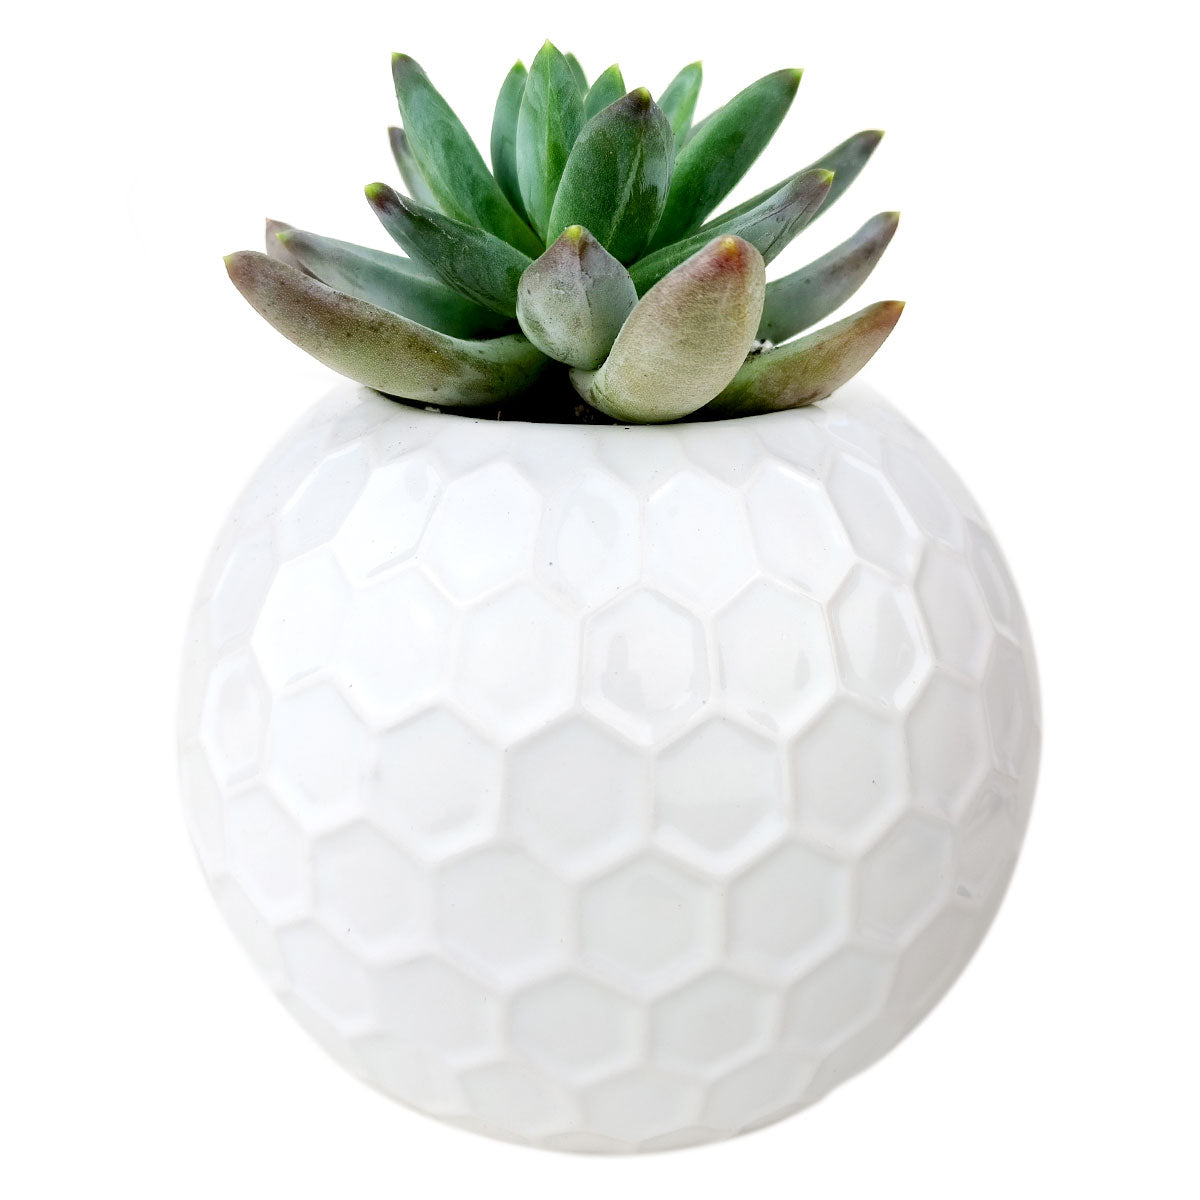 Beehive Pot for sale, ceramic vase for home decor, ceramic succulent and cactus pots for sale, Succulent gift ideas